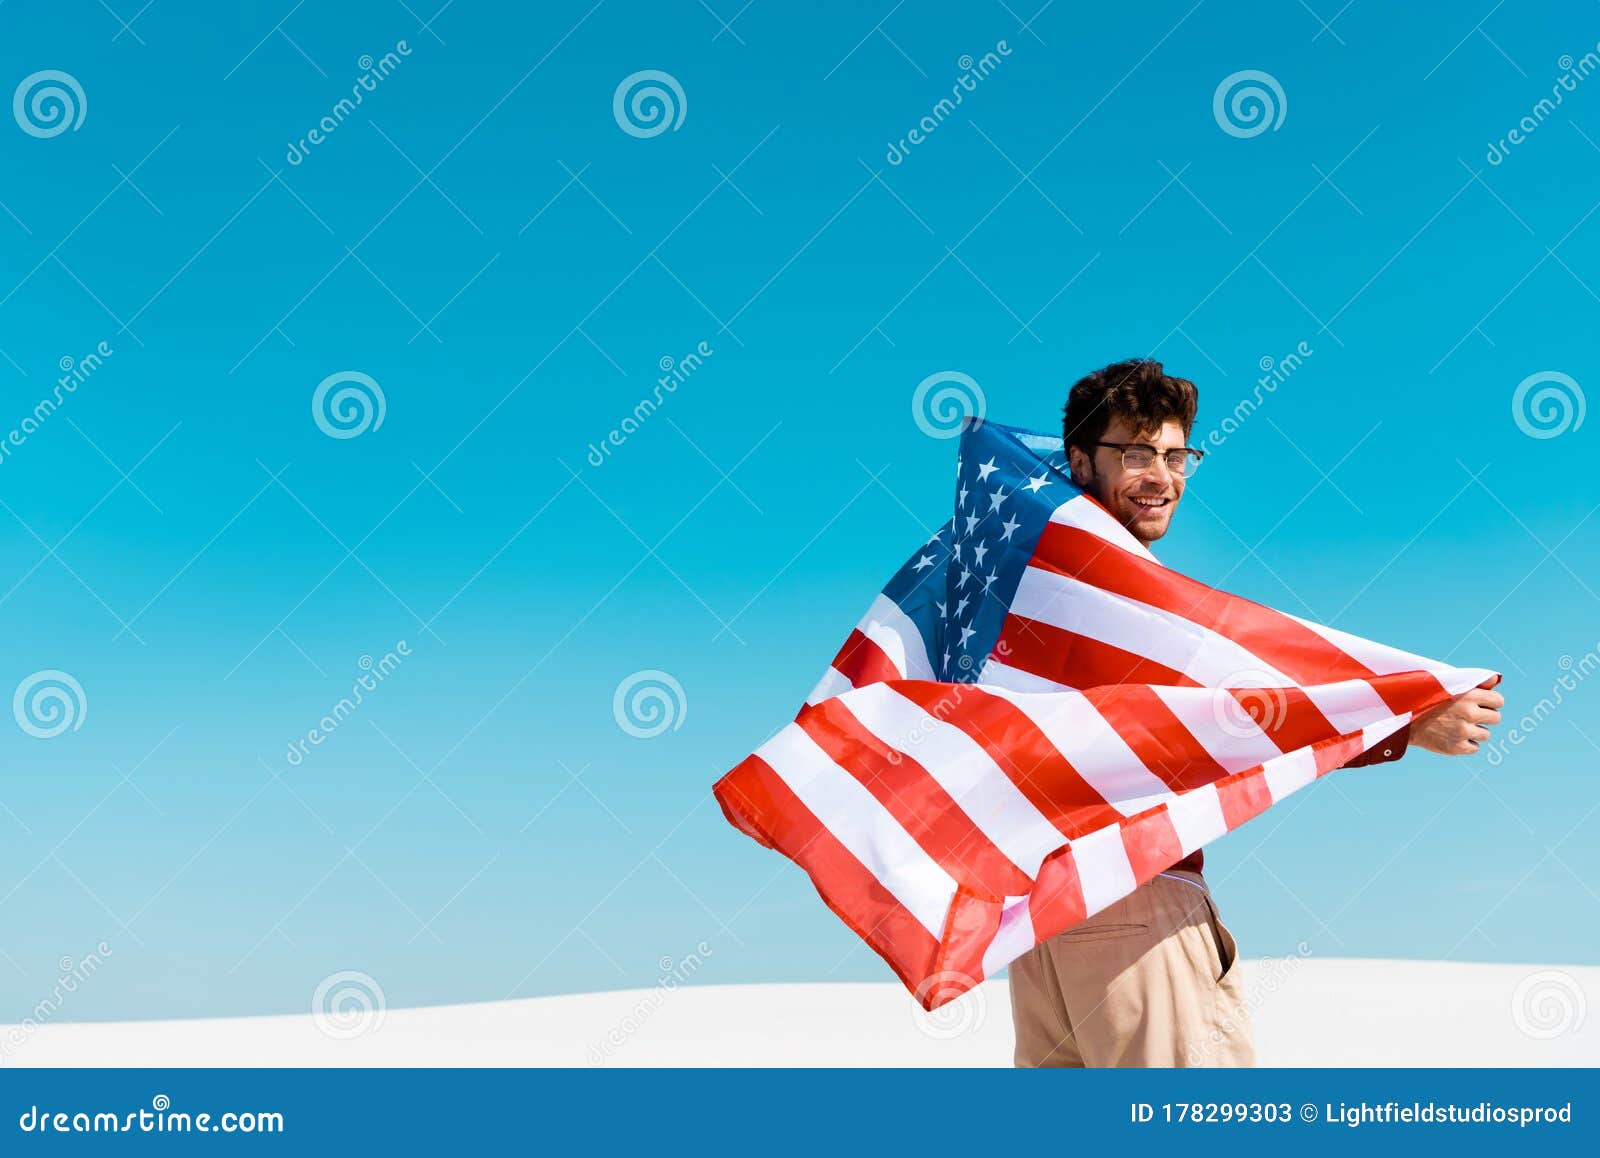 Man With American Flag On Windy Sandy Beach Against Clear Blue Sky